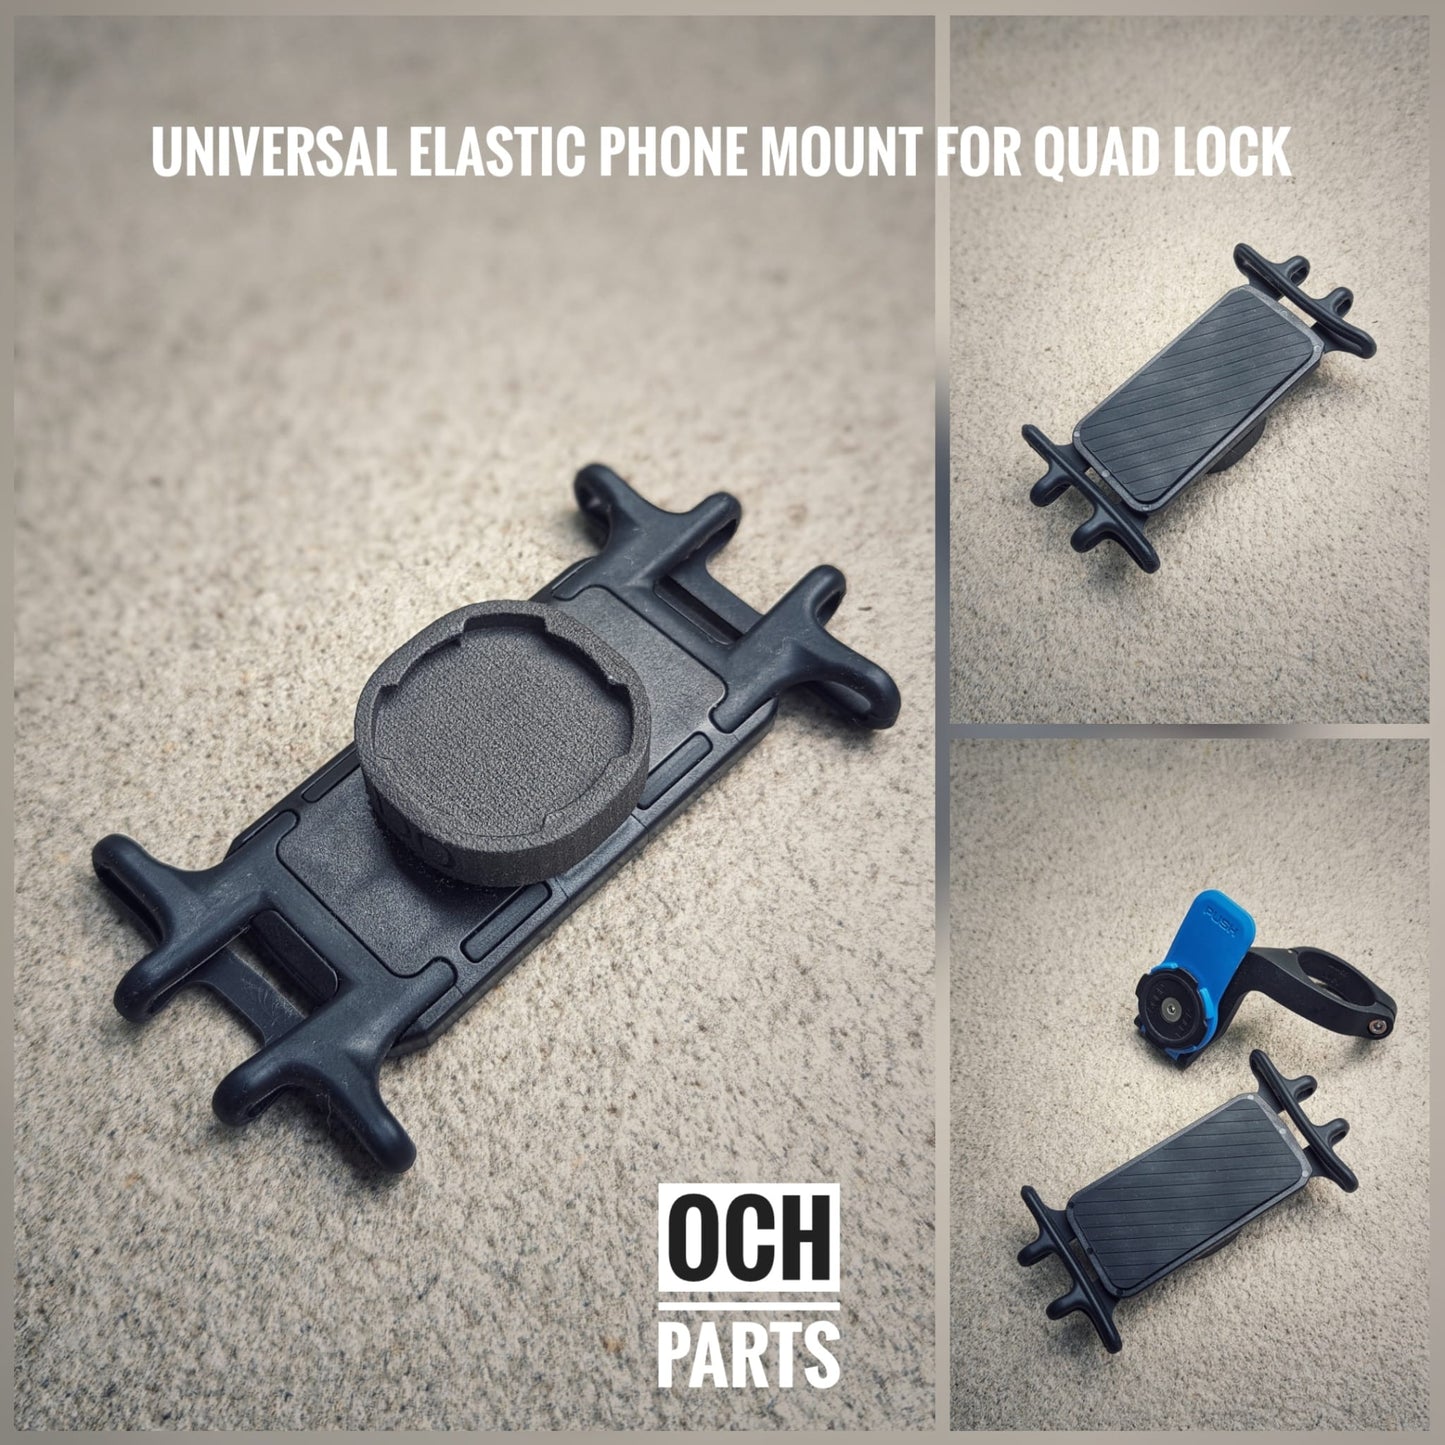 Universal Silicon Phone Mount for Quad Lock